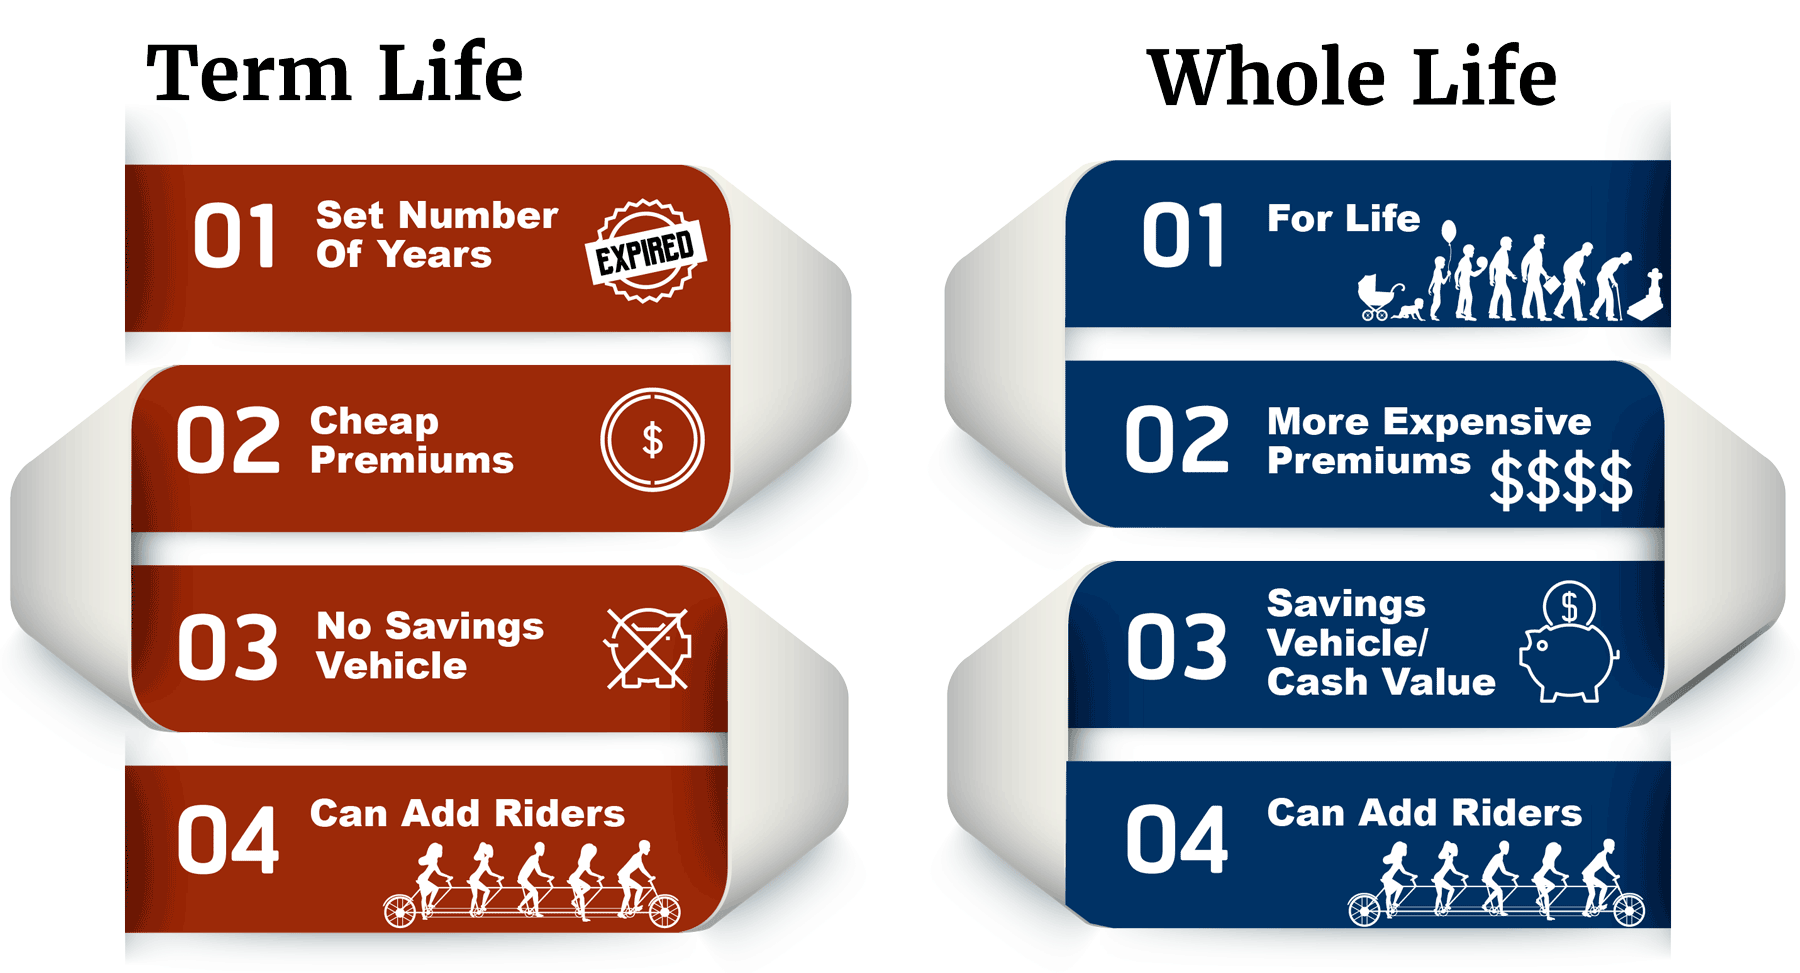 Cheap Life Insurance